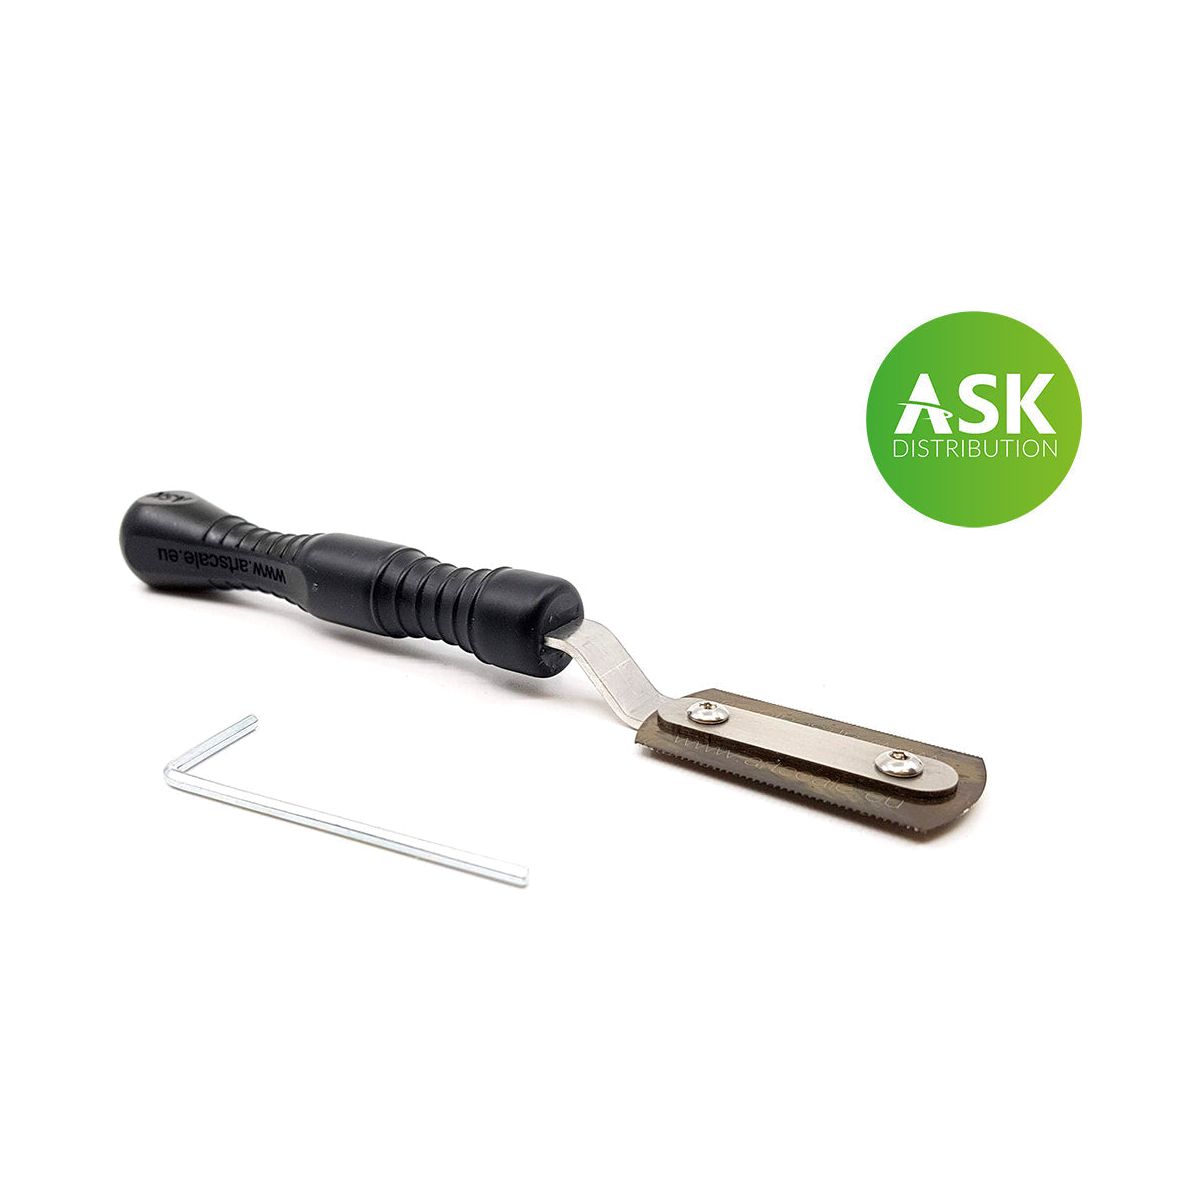 ASK holder- razor saw asymetric quide